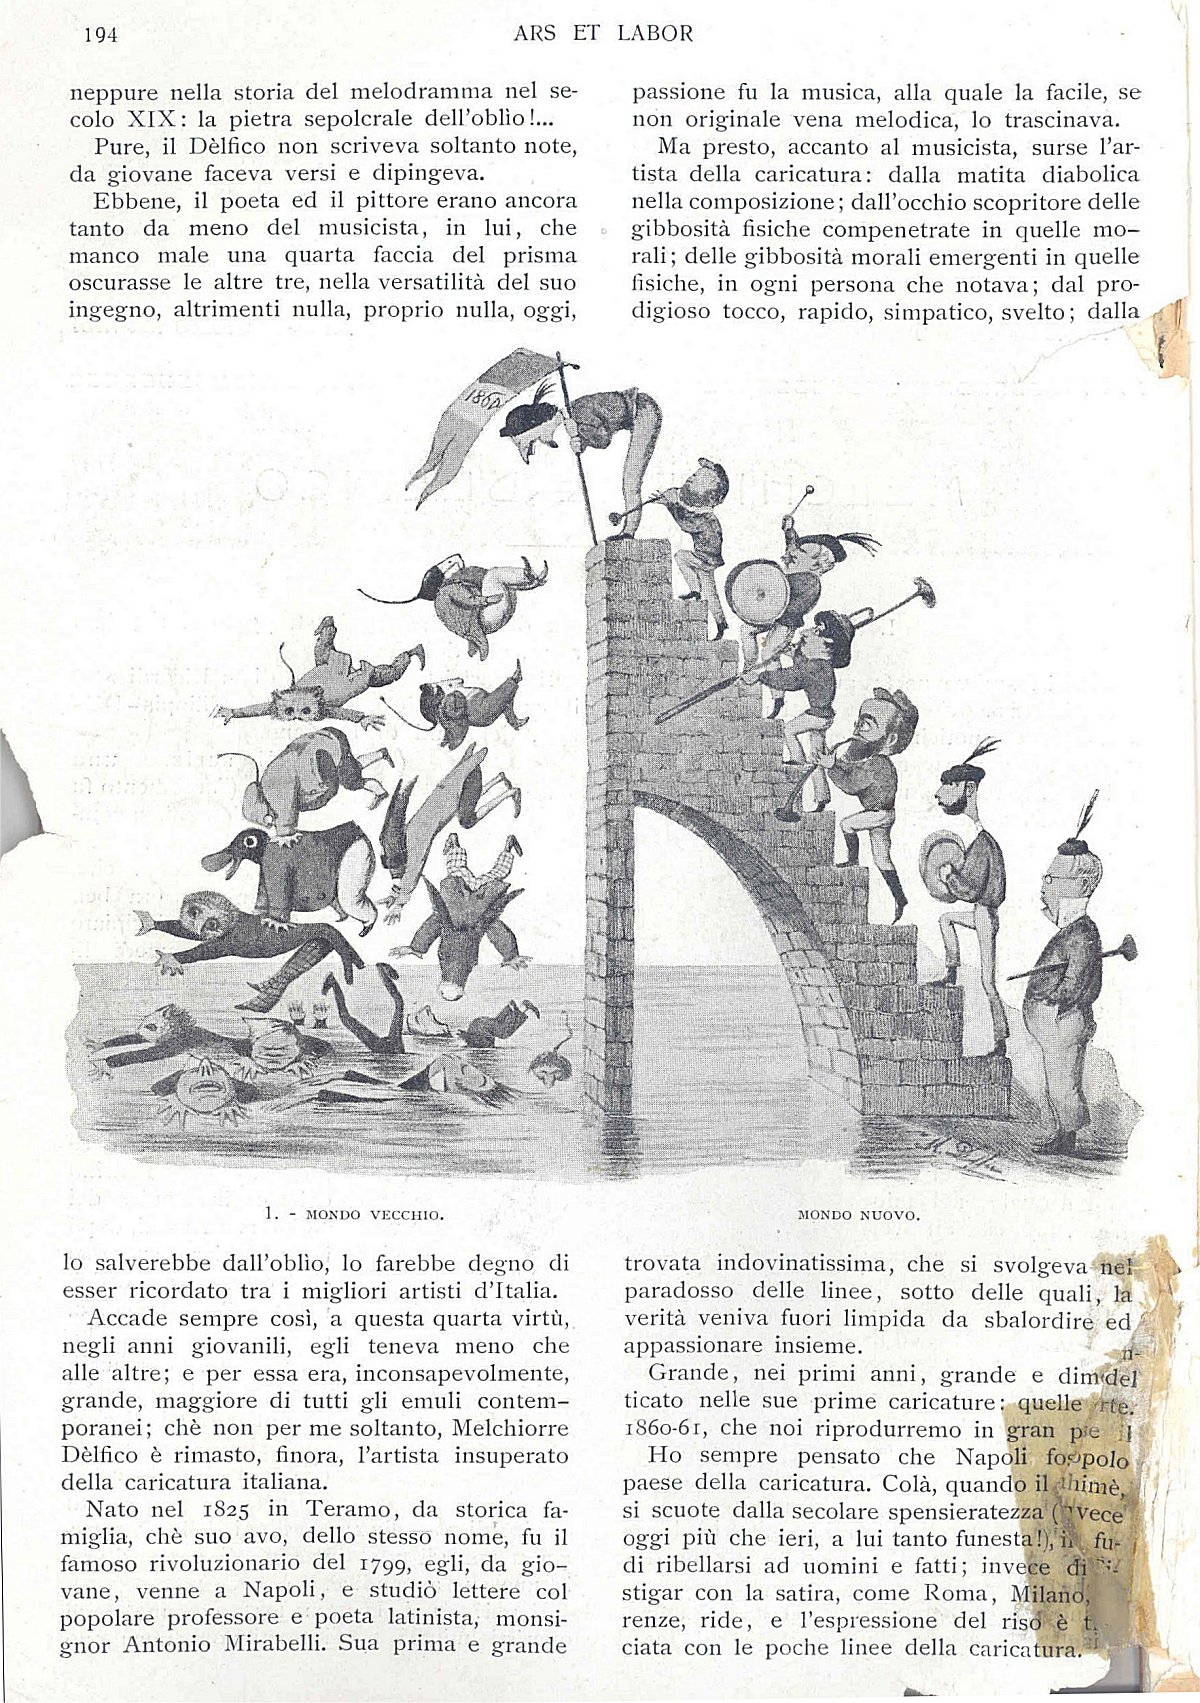 "Ars et Labor", Marzo 1906, anno 61°, n. 3, pag. 194